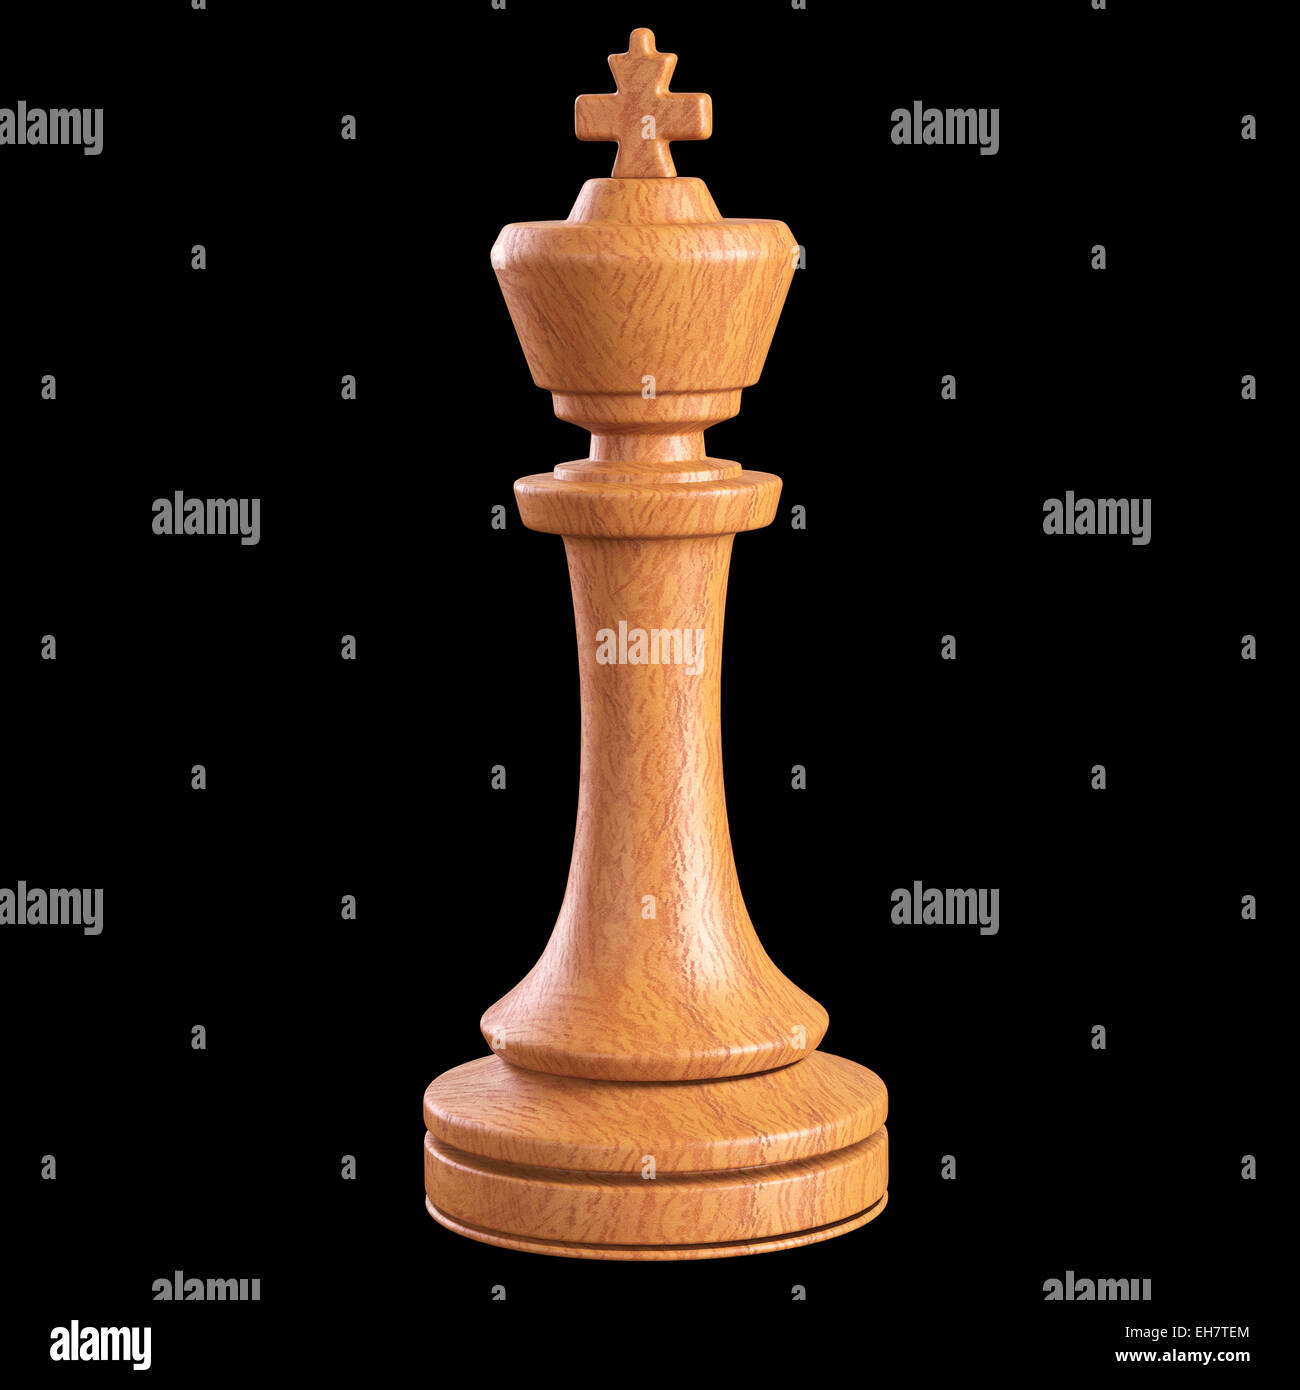 King chess piece, illustration Stock Photo